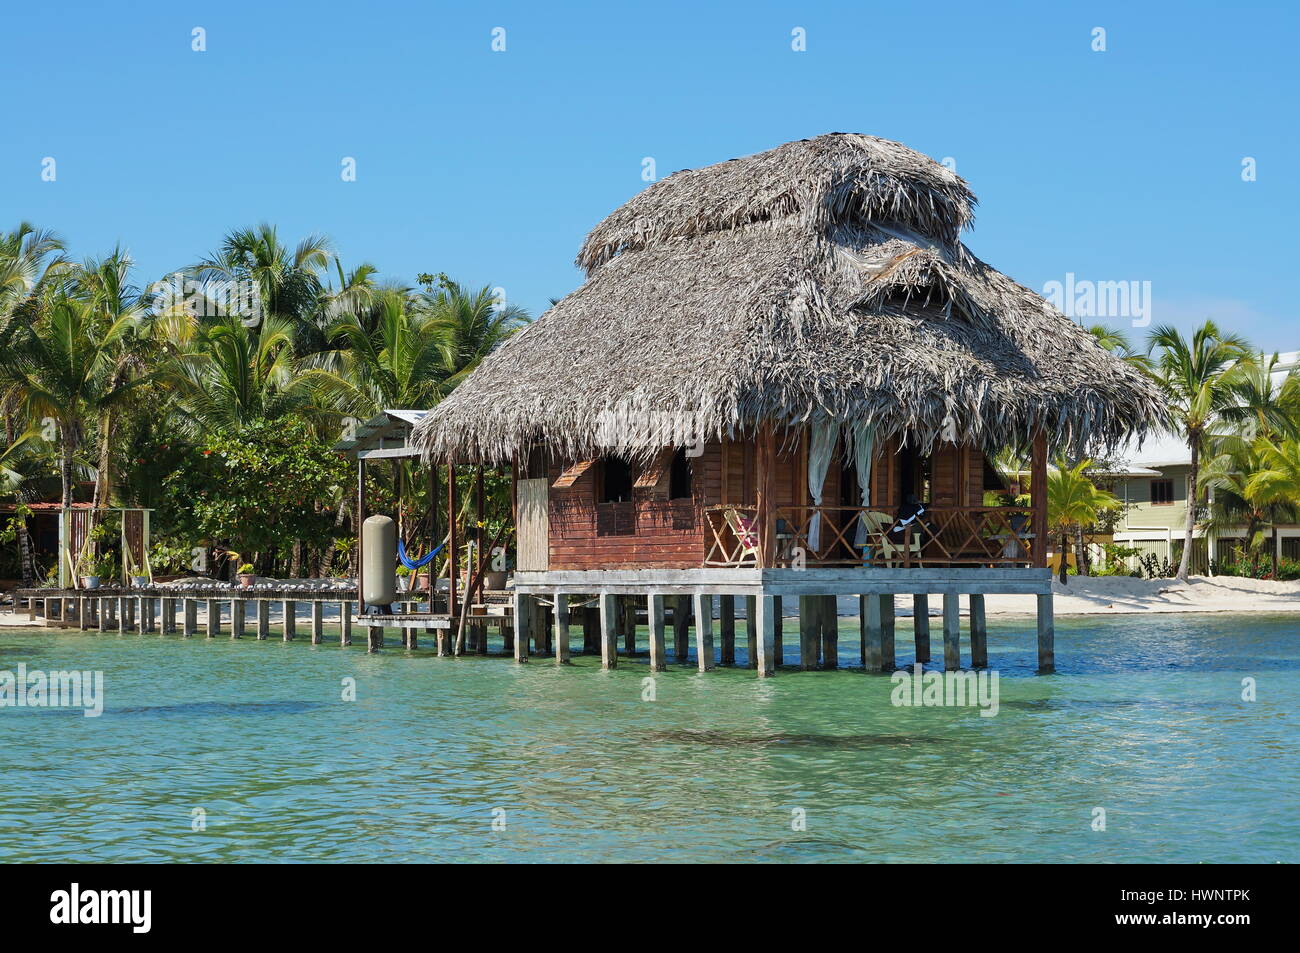 Overwater bungalow with thatch roof, Bastimentos island, Bocas del Toro, Caribbean, Panama Stock Photo